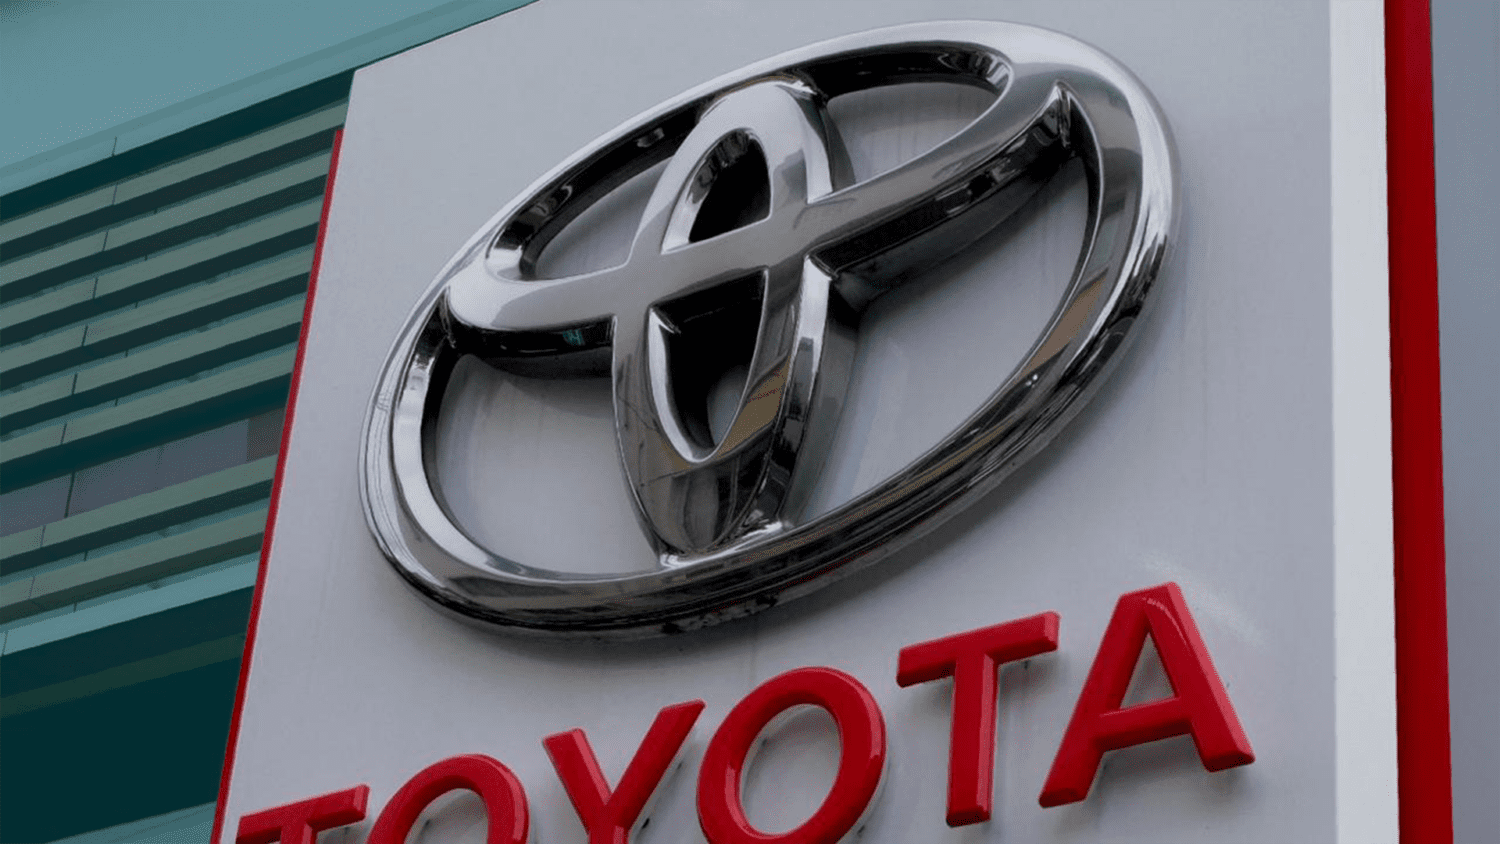 Toyota production